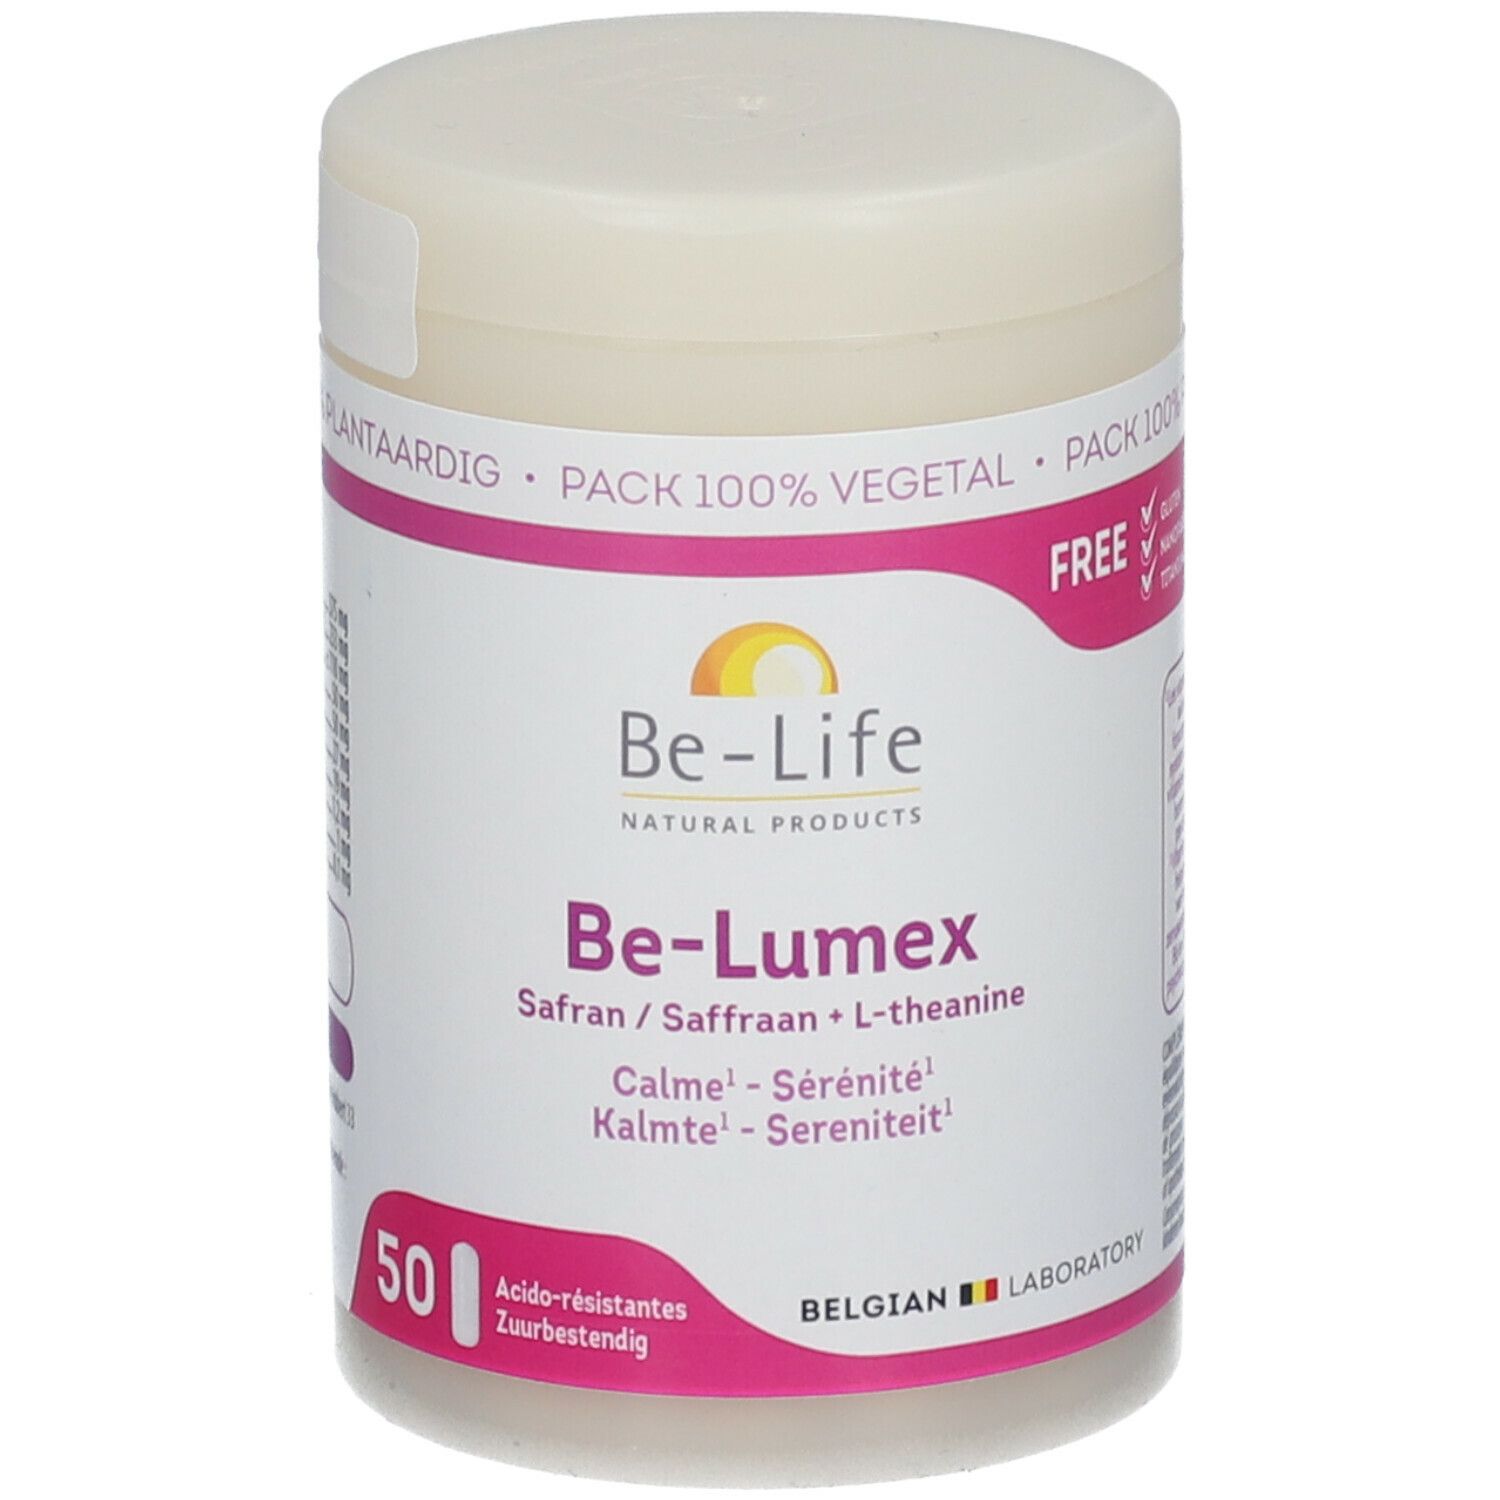 Be-Life Be-Lumex